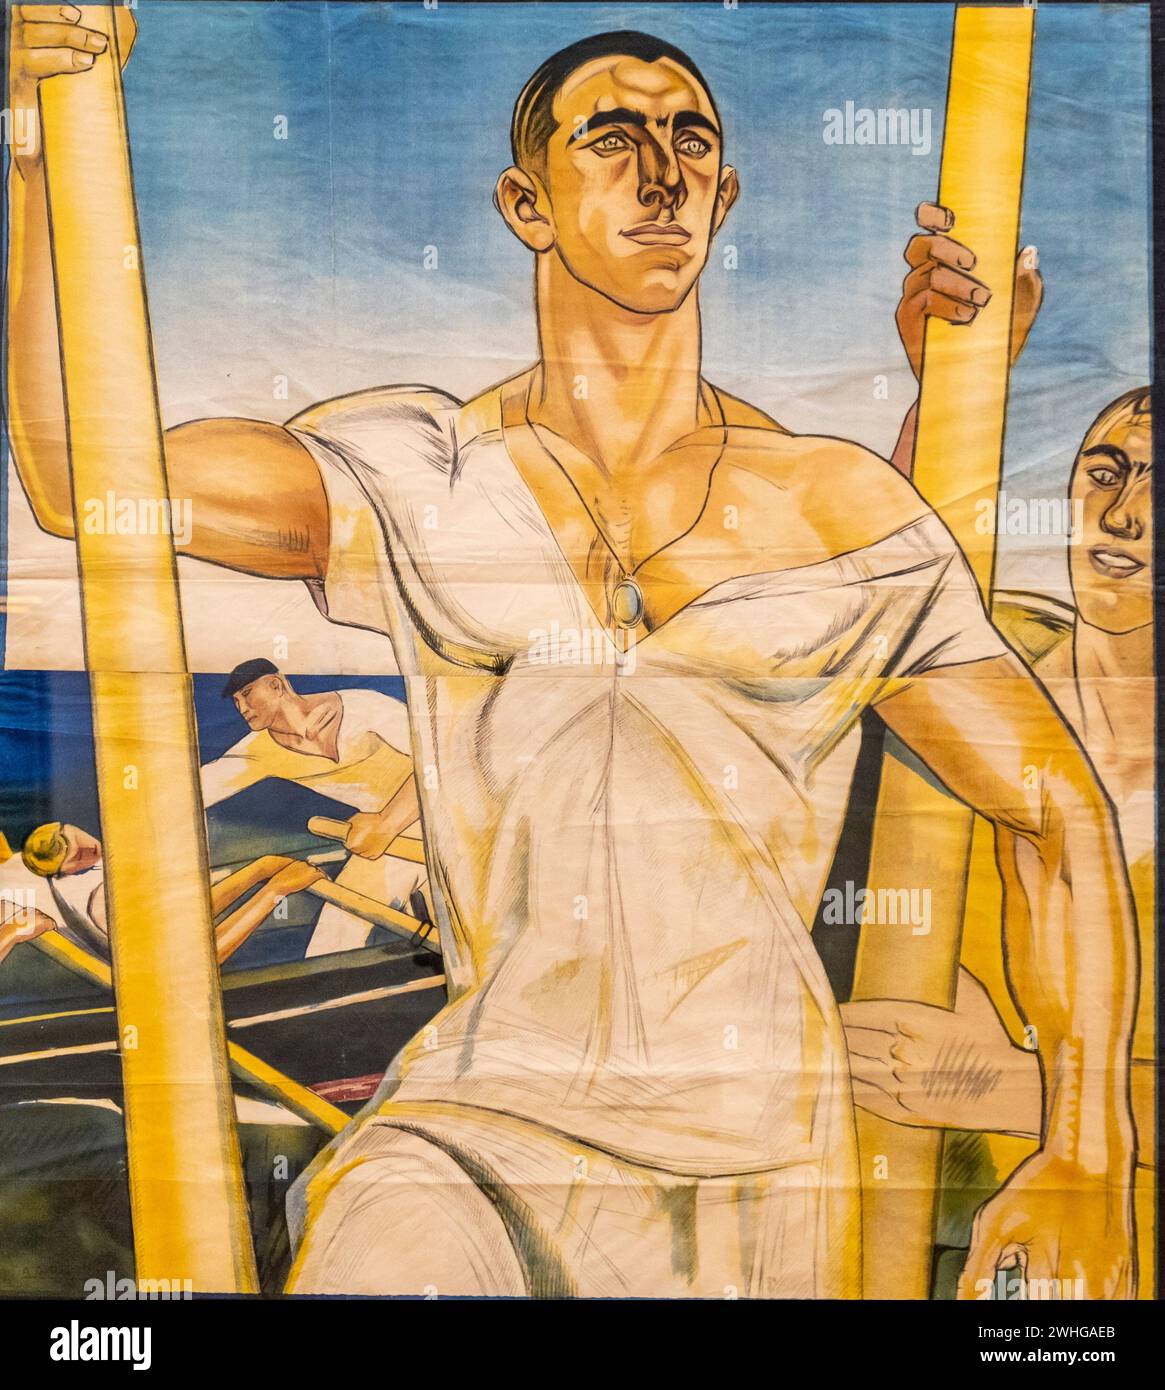 San Sebastián, regate per barche a remi, litografia a colori su carta, Aurelio Arteta, 1930, Museo de Bellas Artes, Bilbao, Spagna Foto Stock